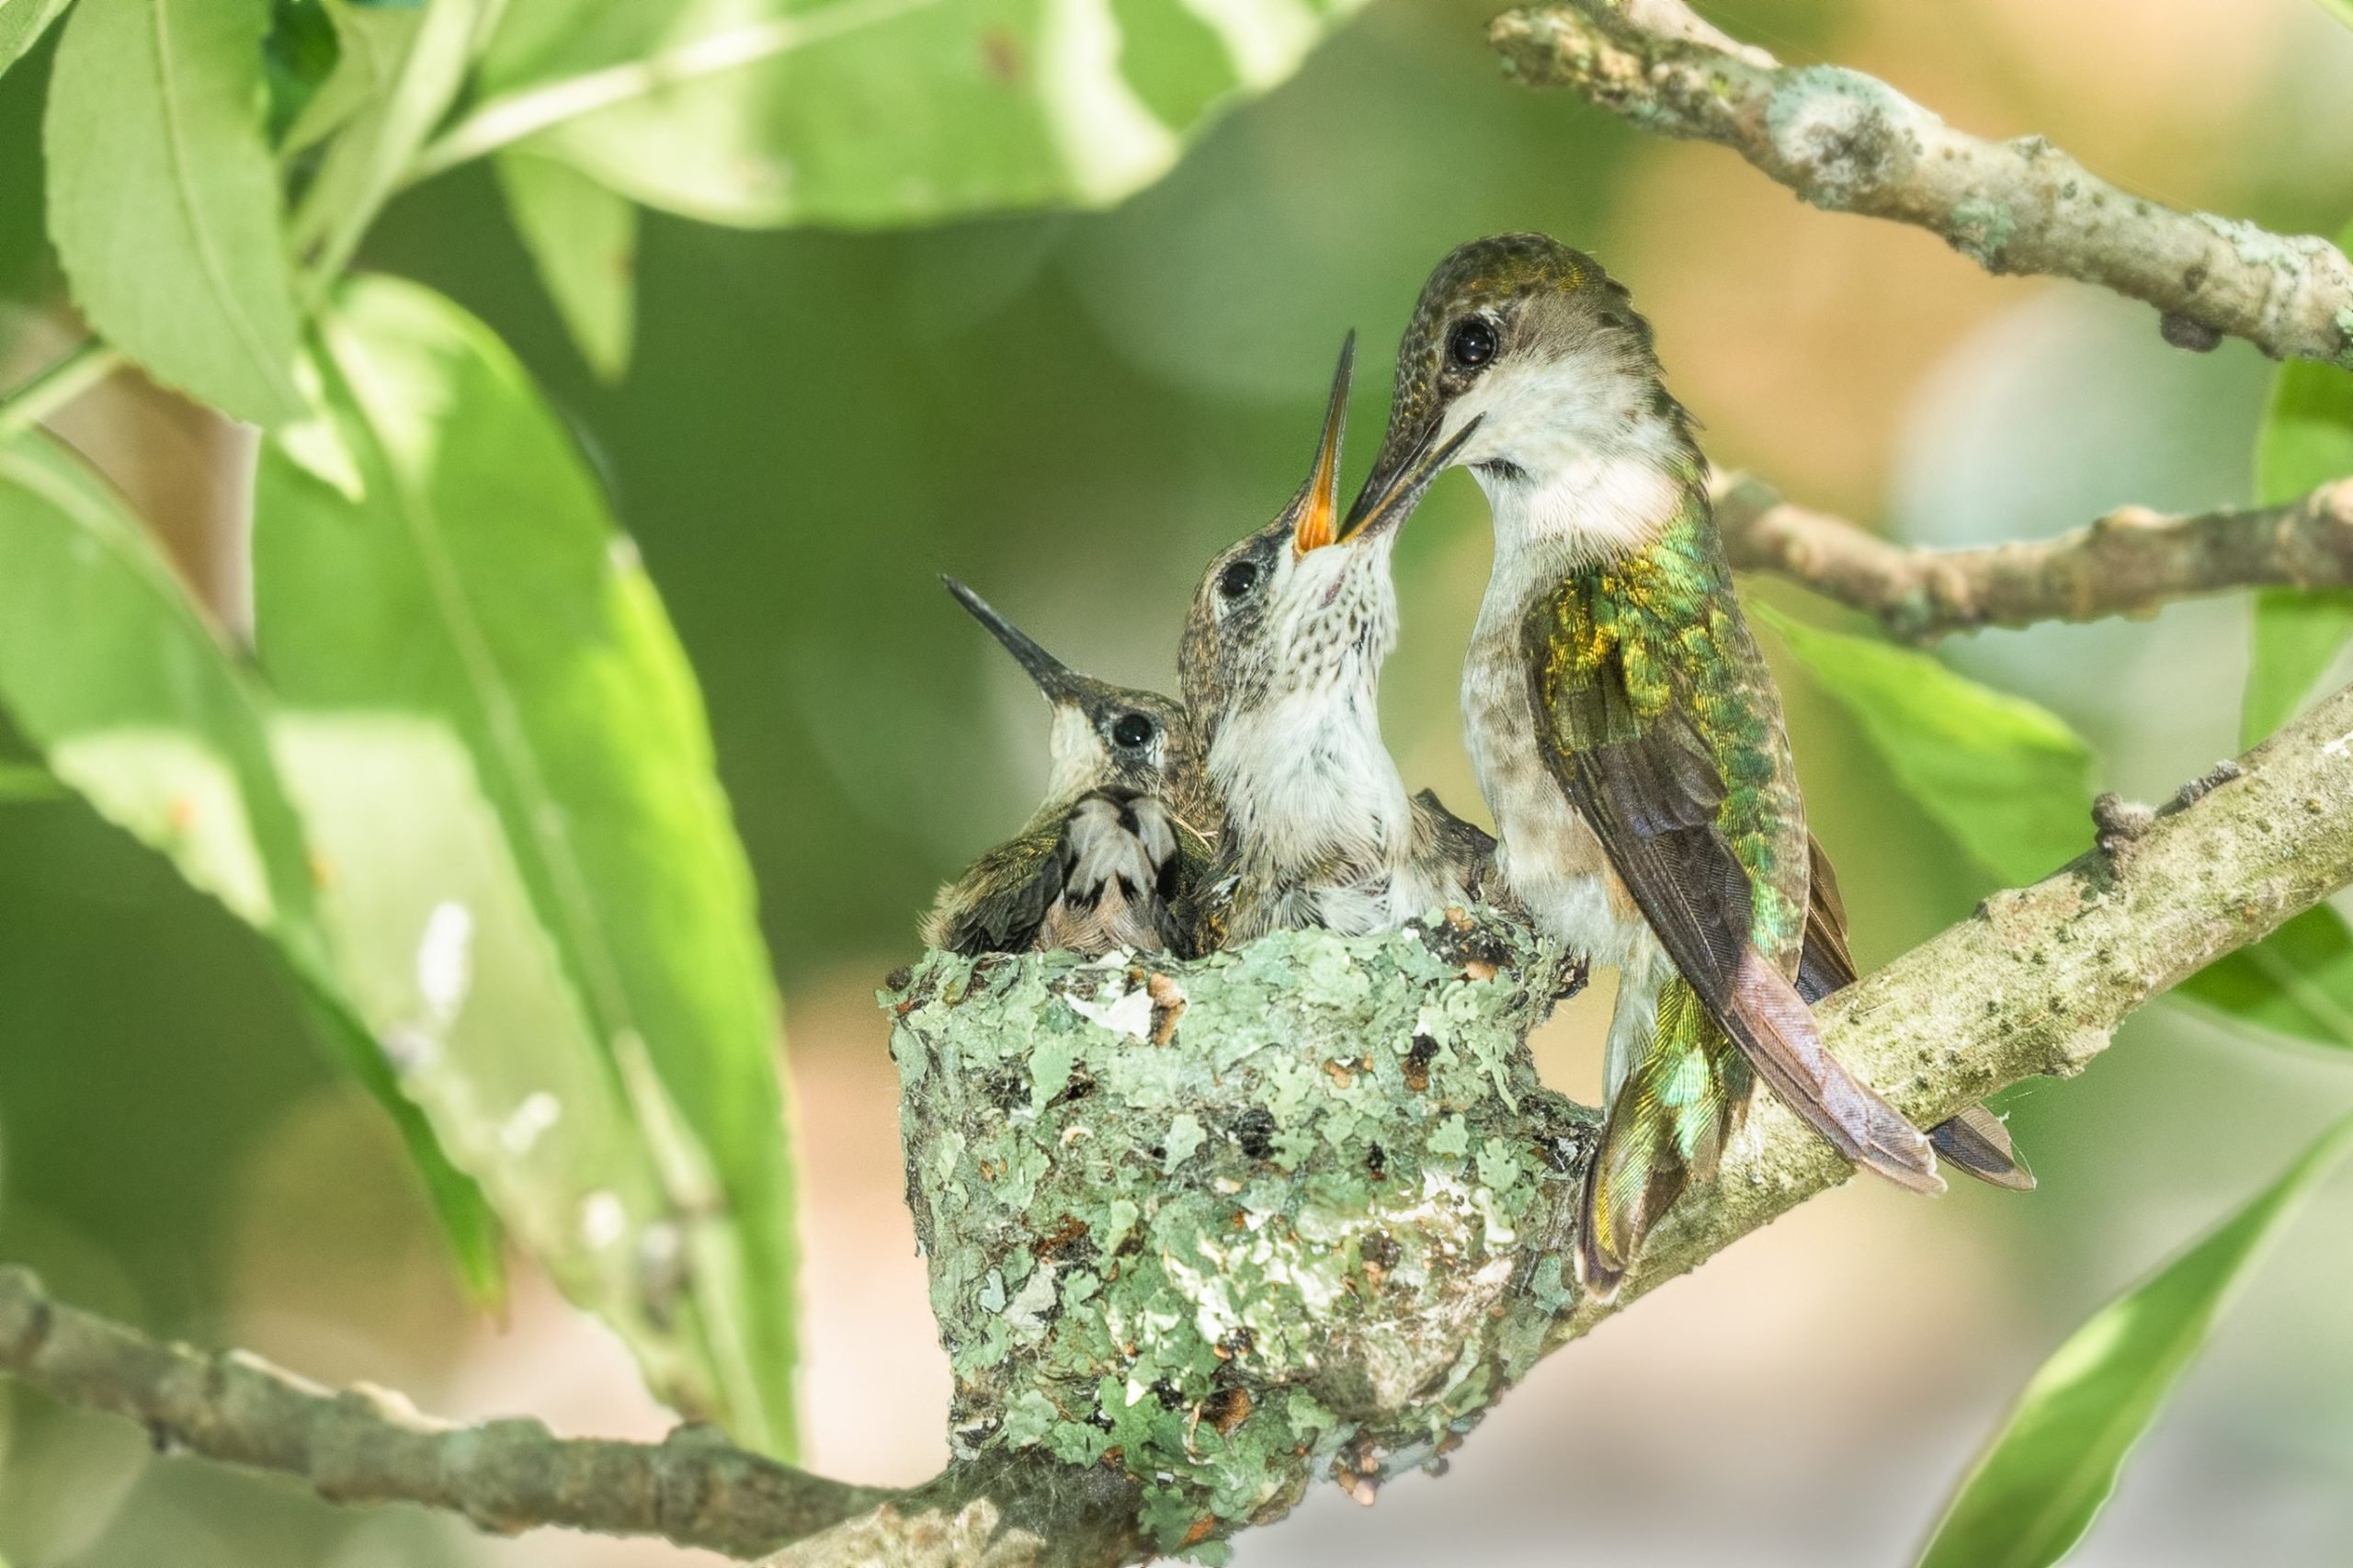 Nidos de colibrí: lo que debes saber